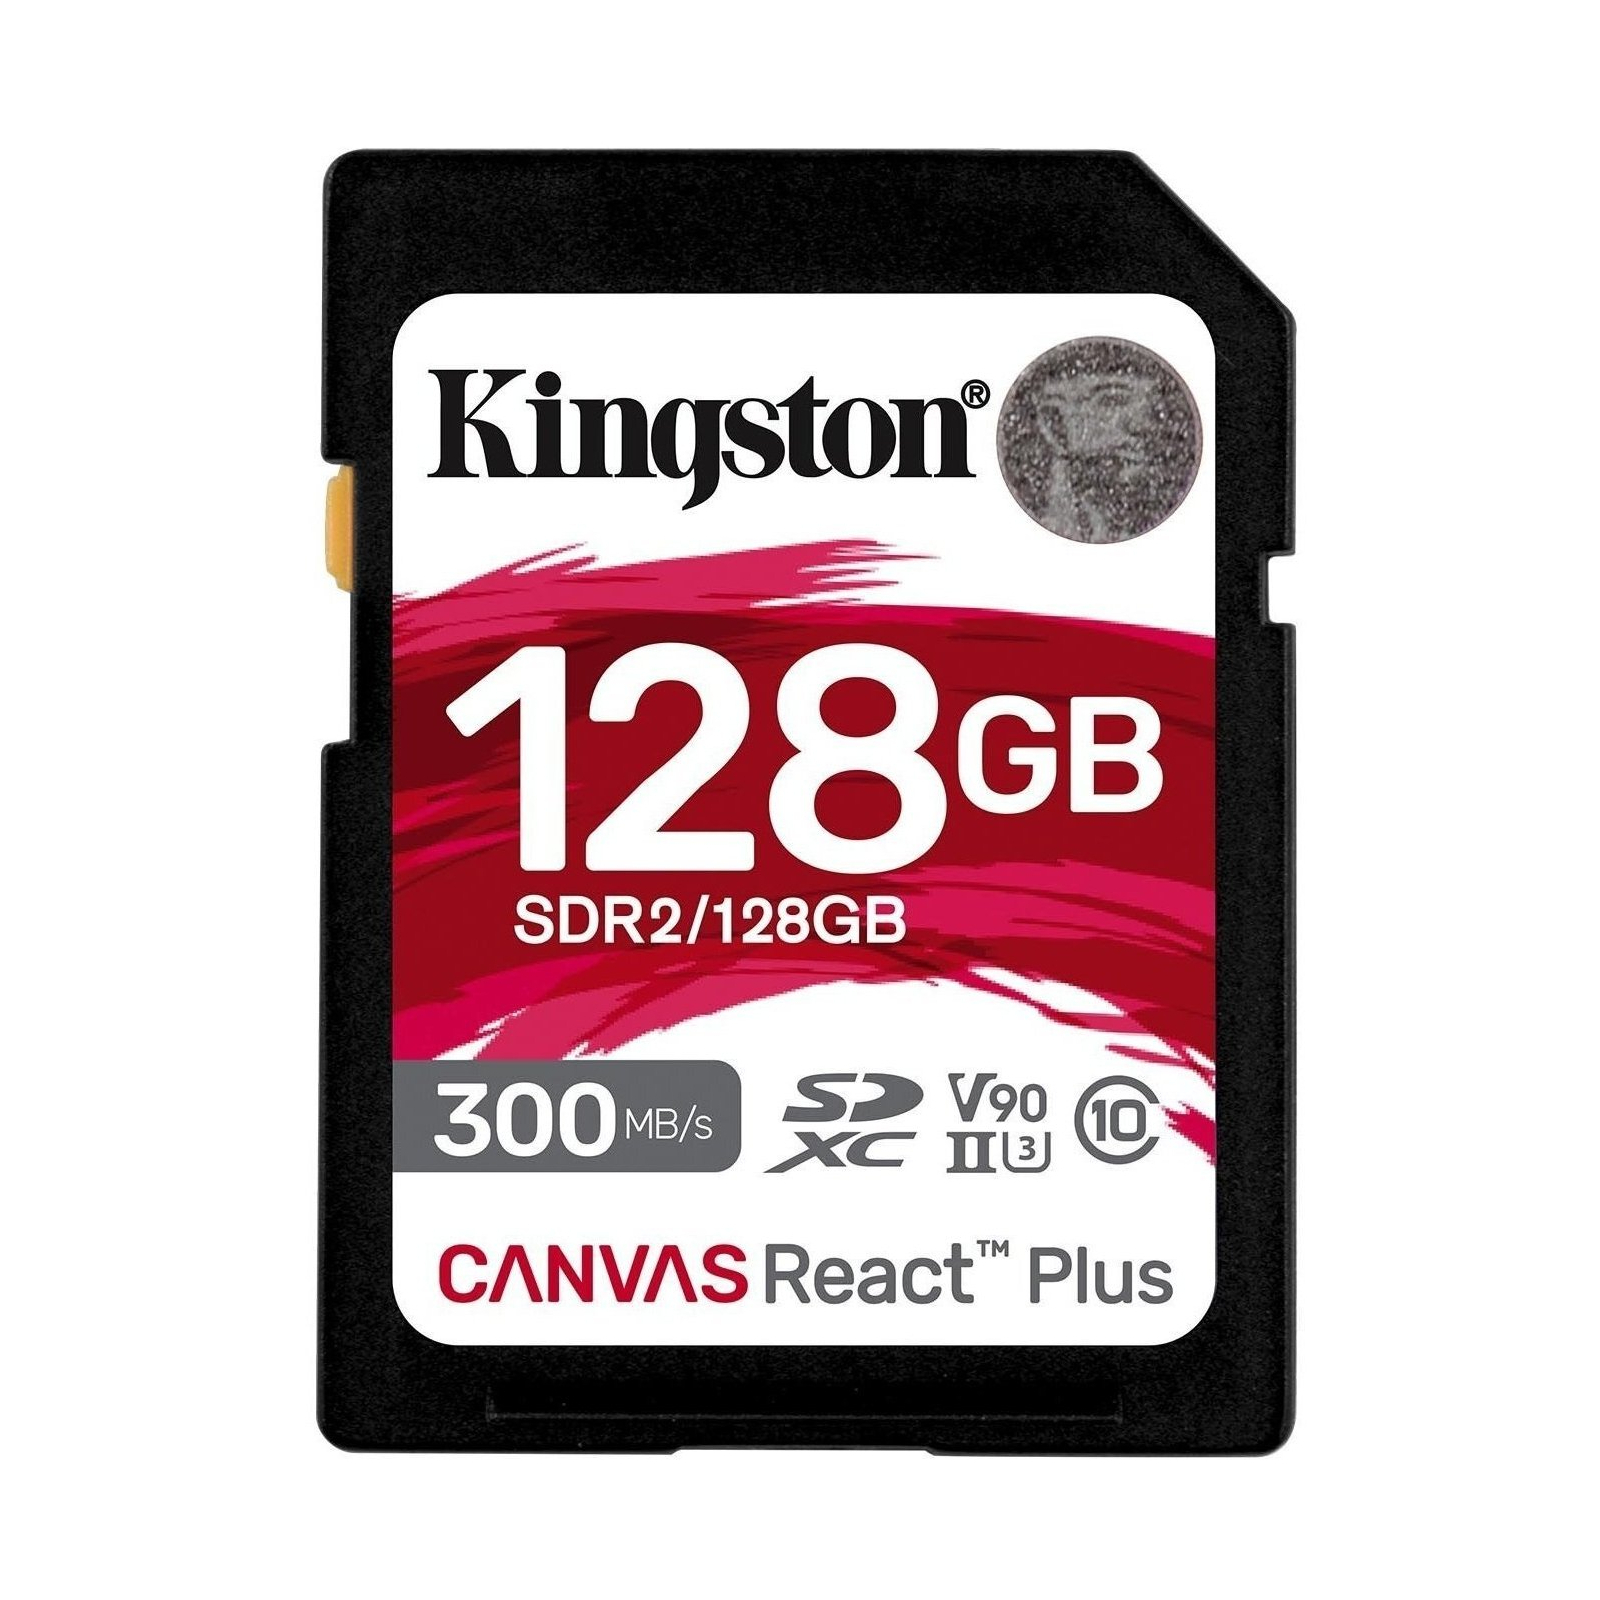 Карта пам'яті Kingston 64GB class 10 UHS-II U3 Canvas React Plus (SDR2/64GB)